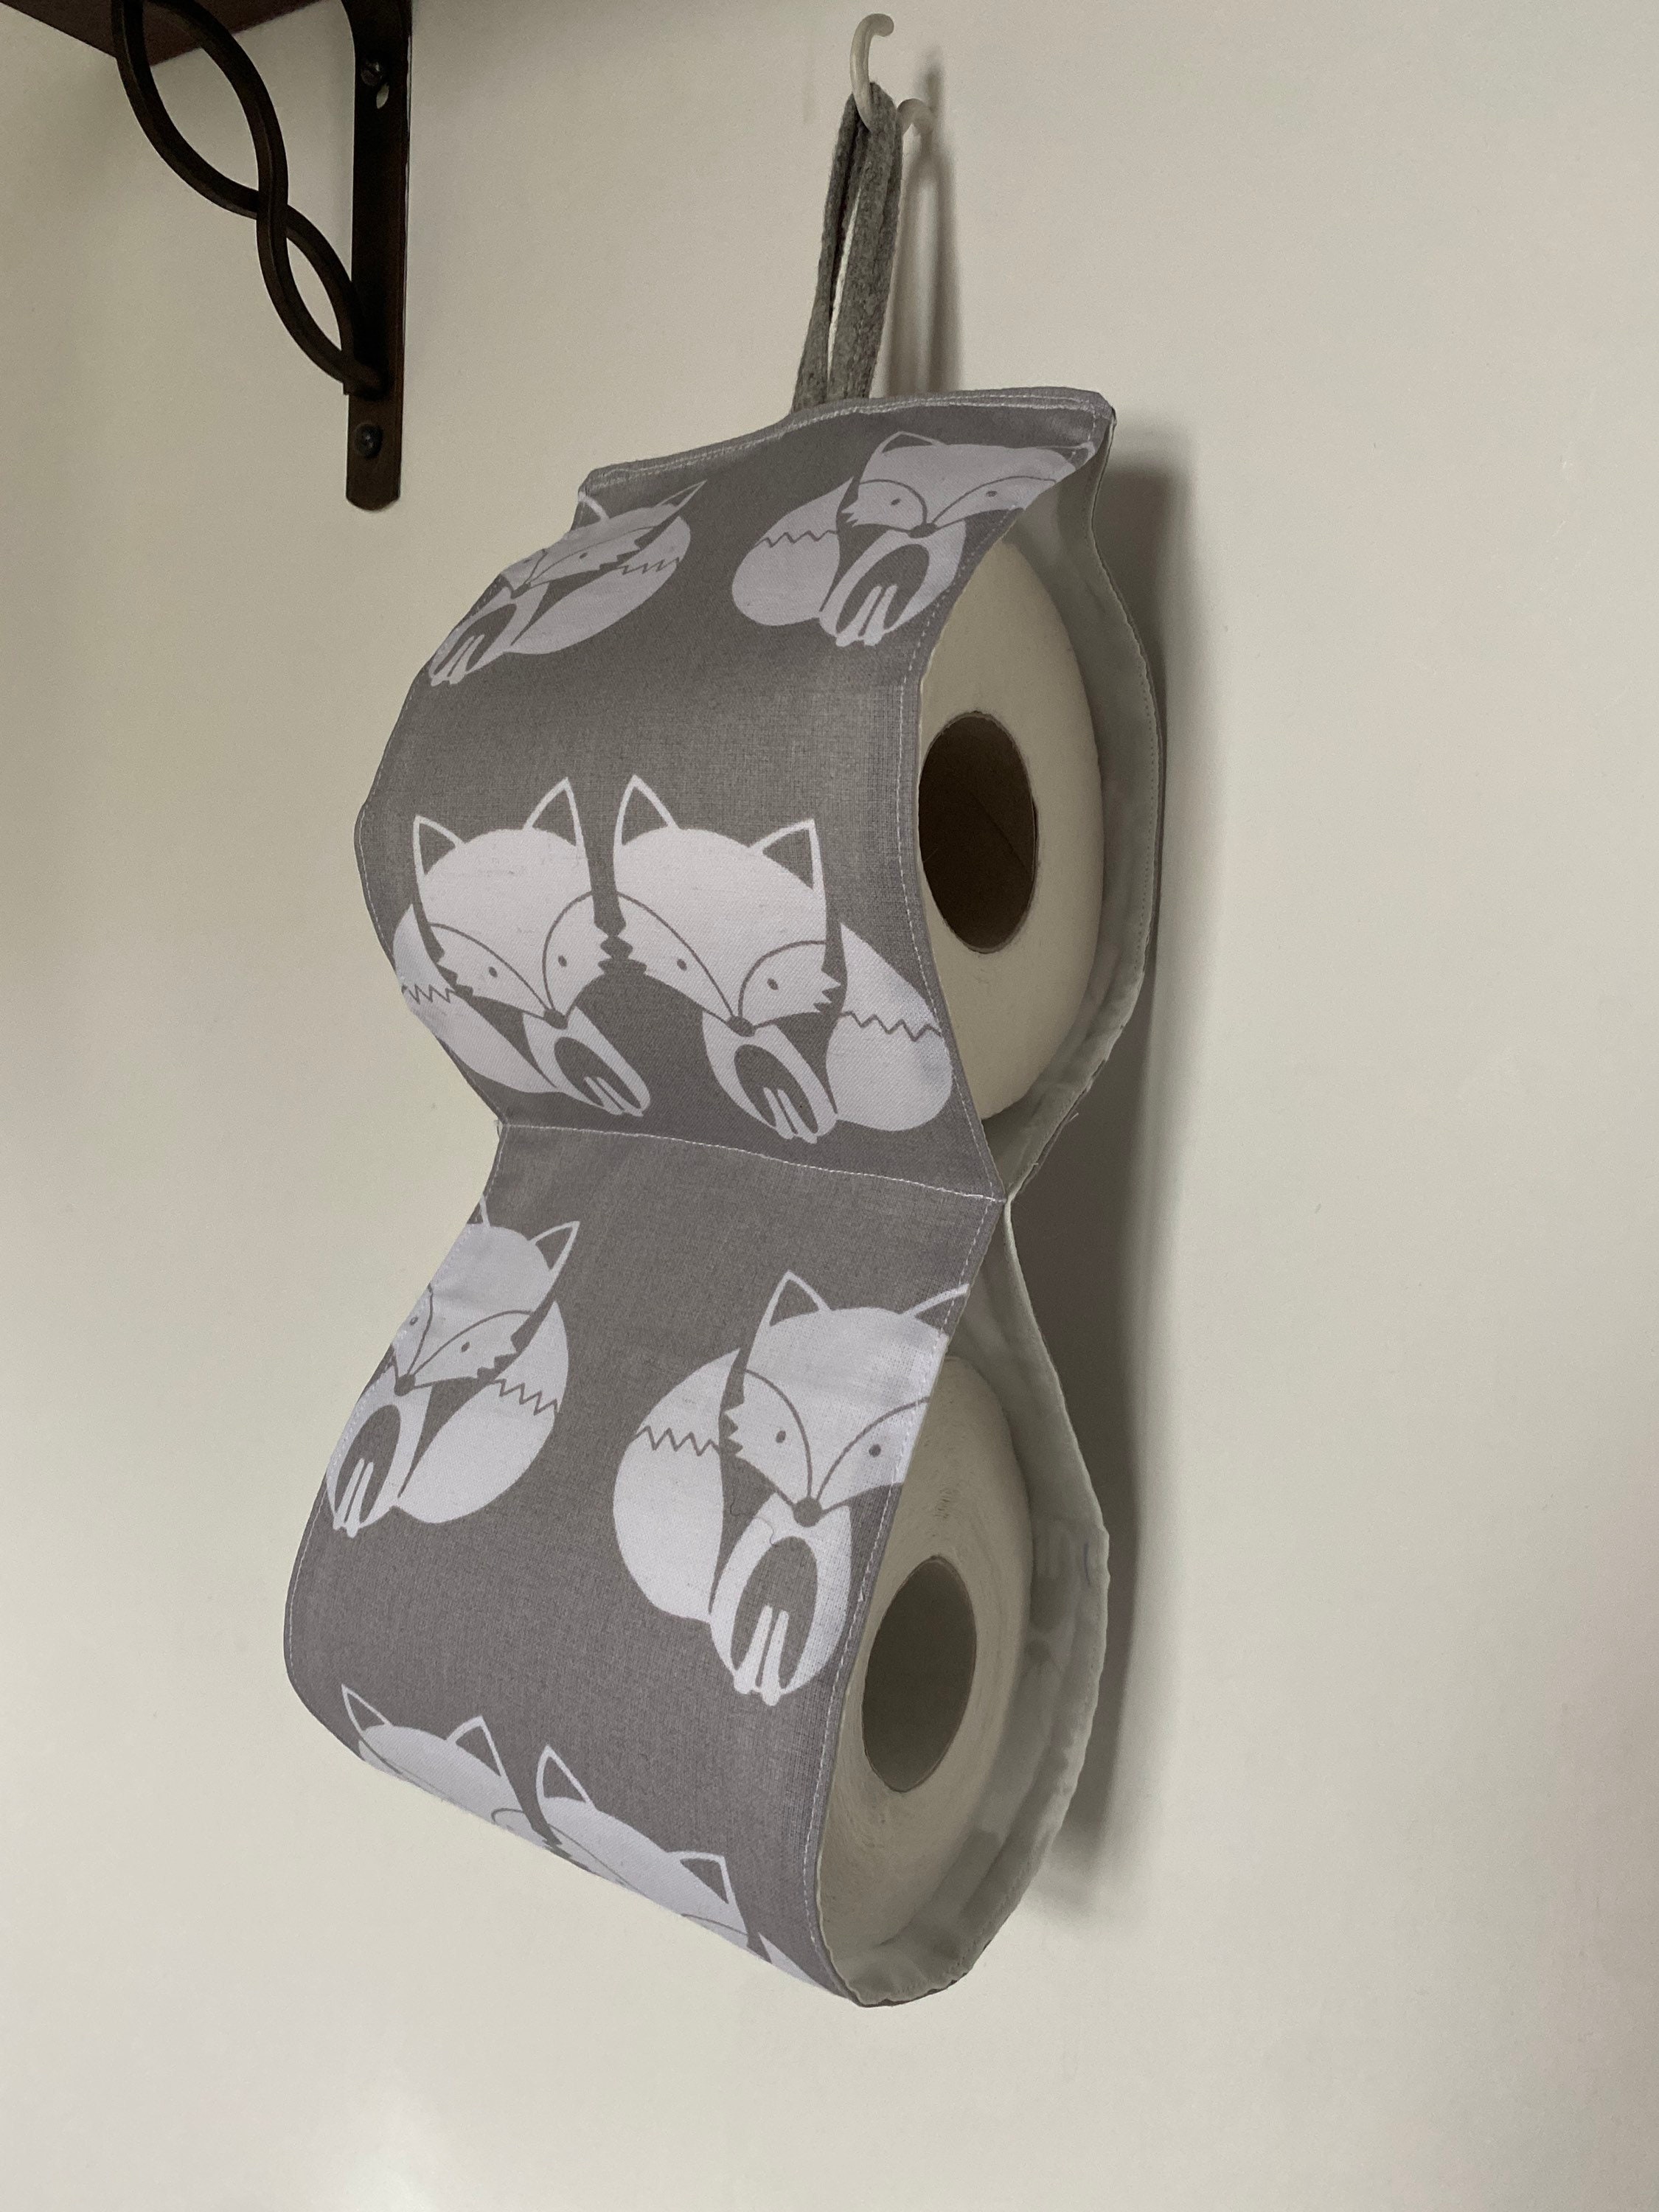 Hanging Toilet Roll Holder Organiser Storage bathroom fabric